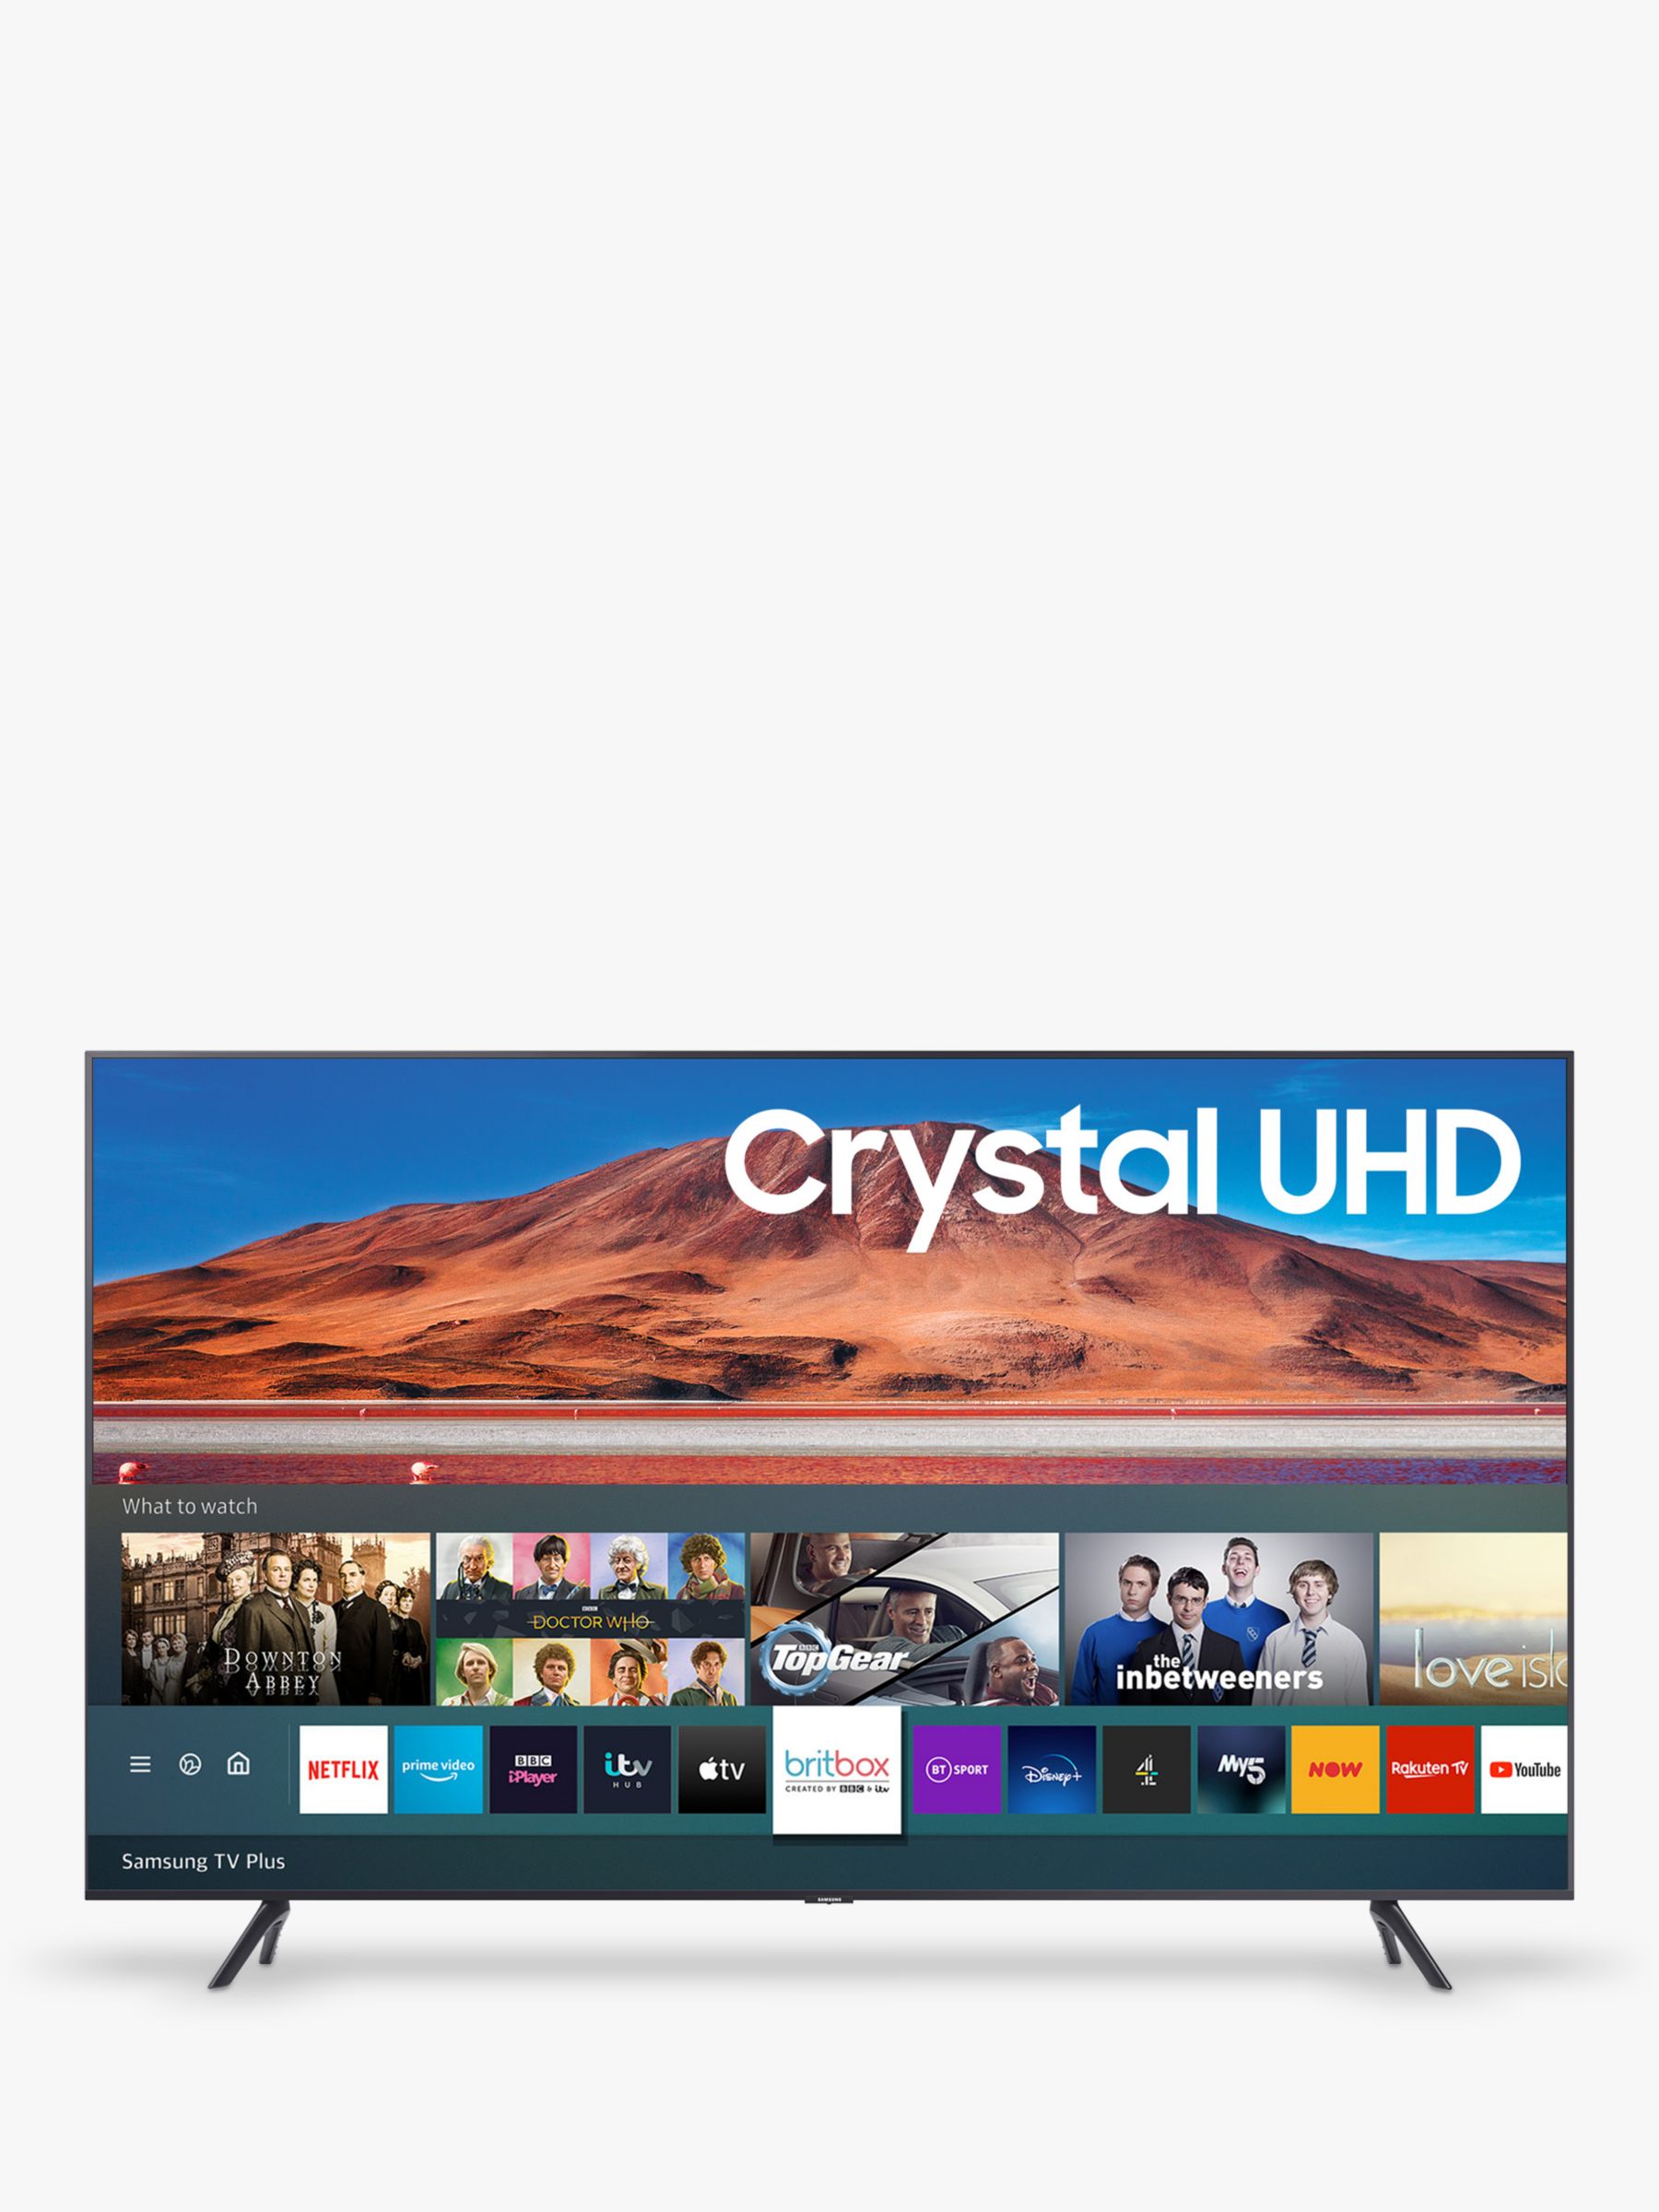 Samsung UE50TU7100 (2020) HDR 4K Ultra HD Smart TV, 50 inch with TVPlus, Carbon Silver